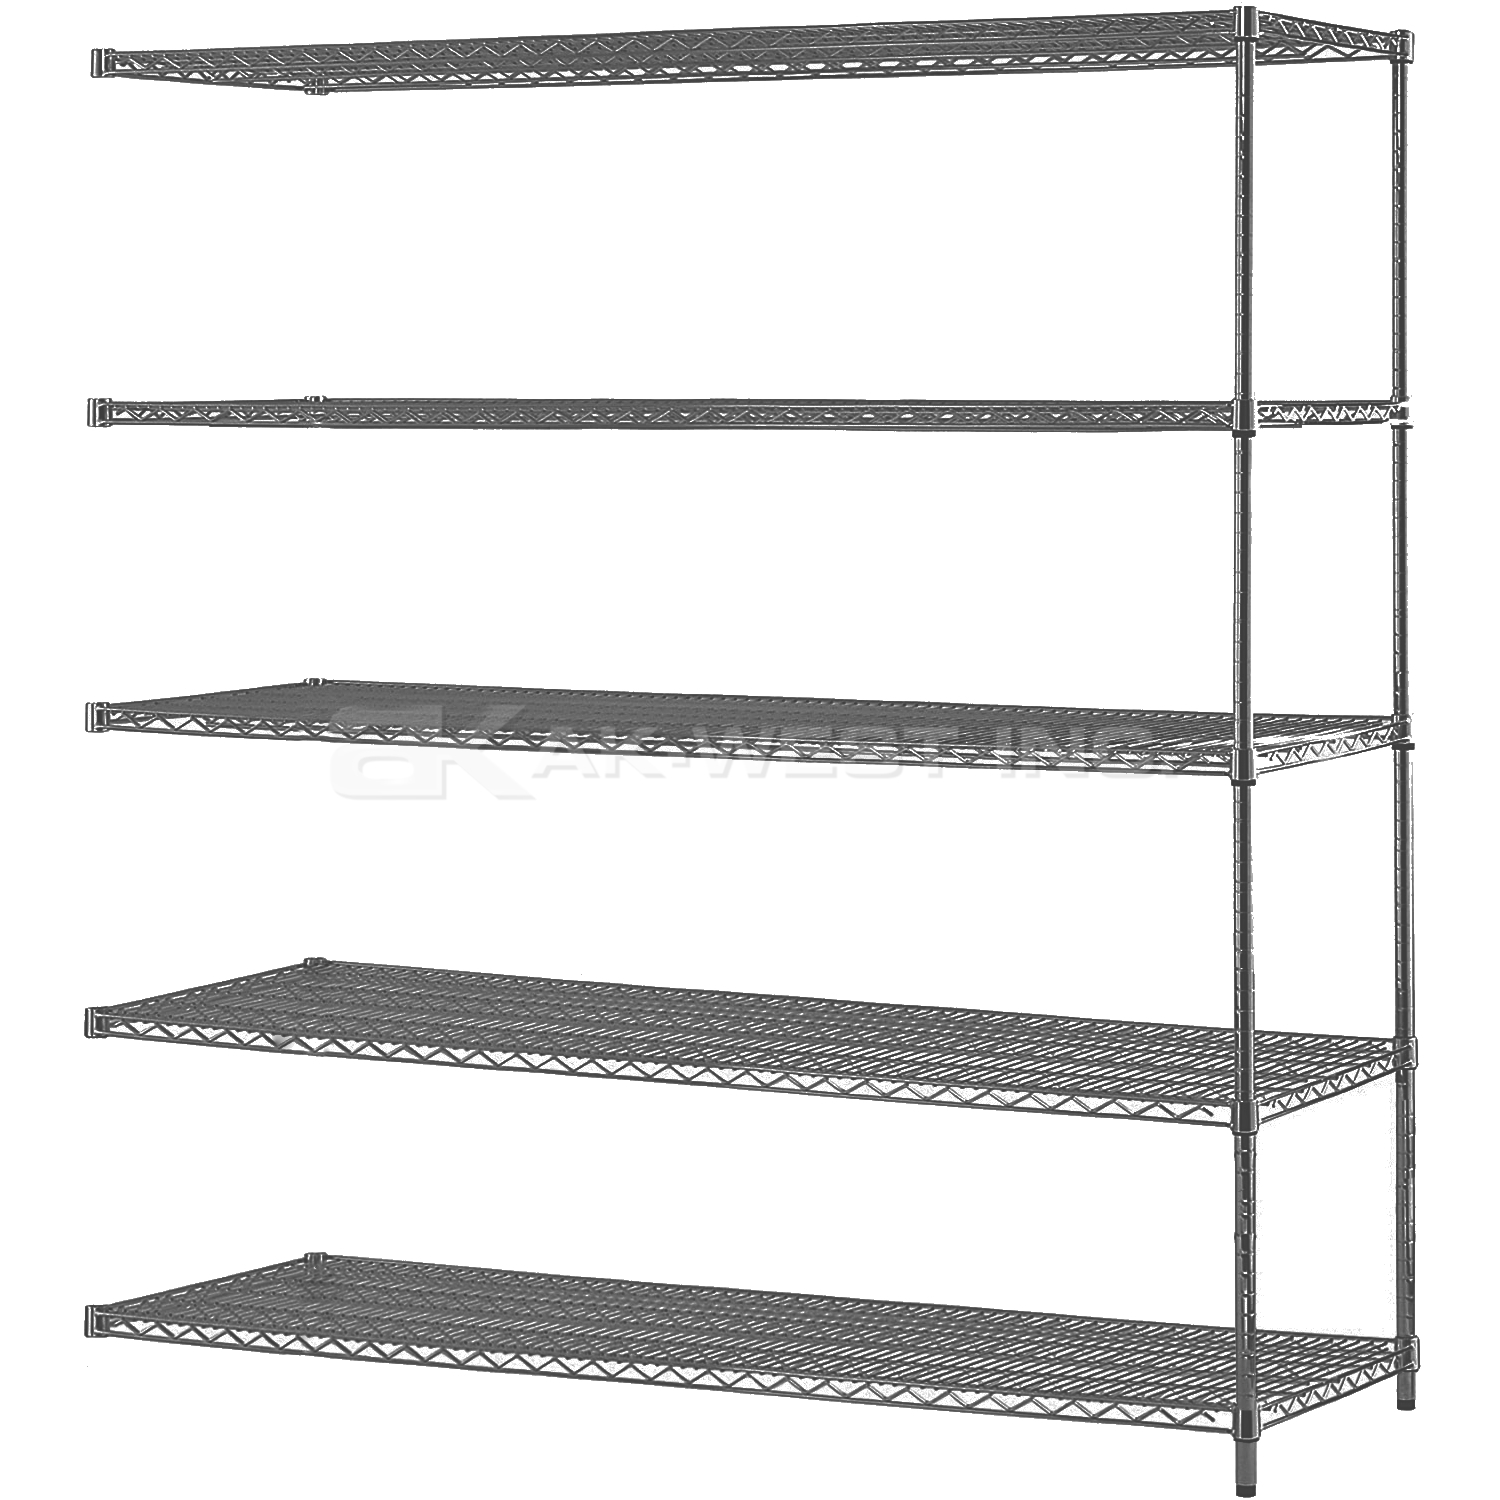 Grey, 24"D x 60"W x 54"H, 6 Shelf, Wire Shelving Adder Kit